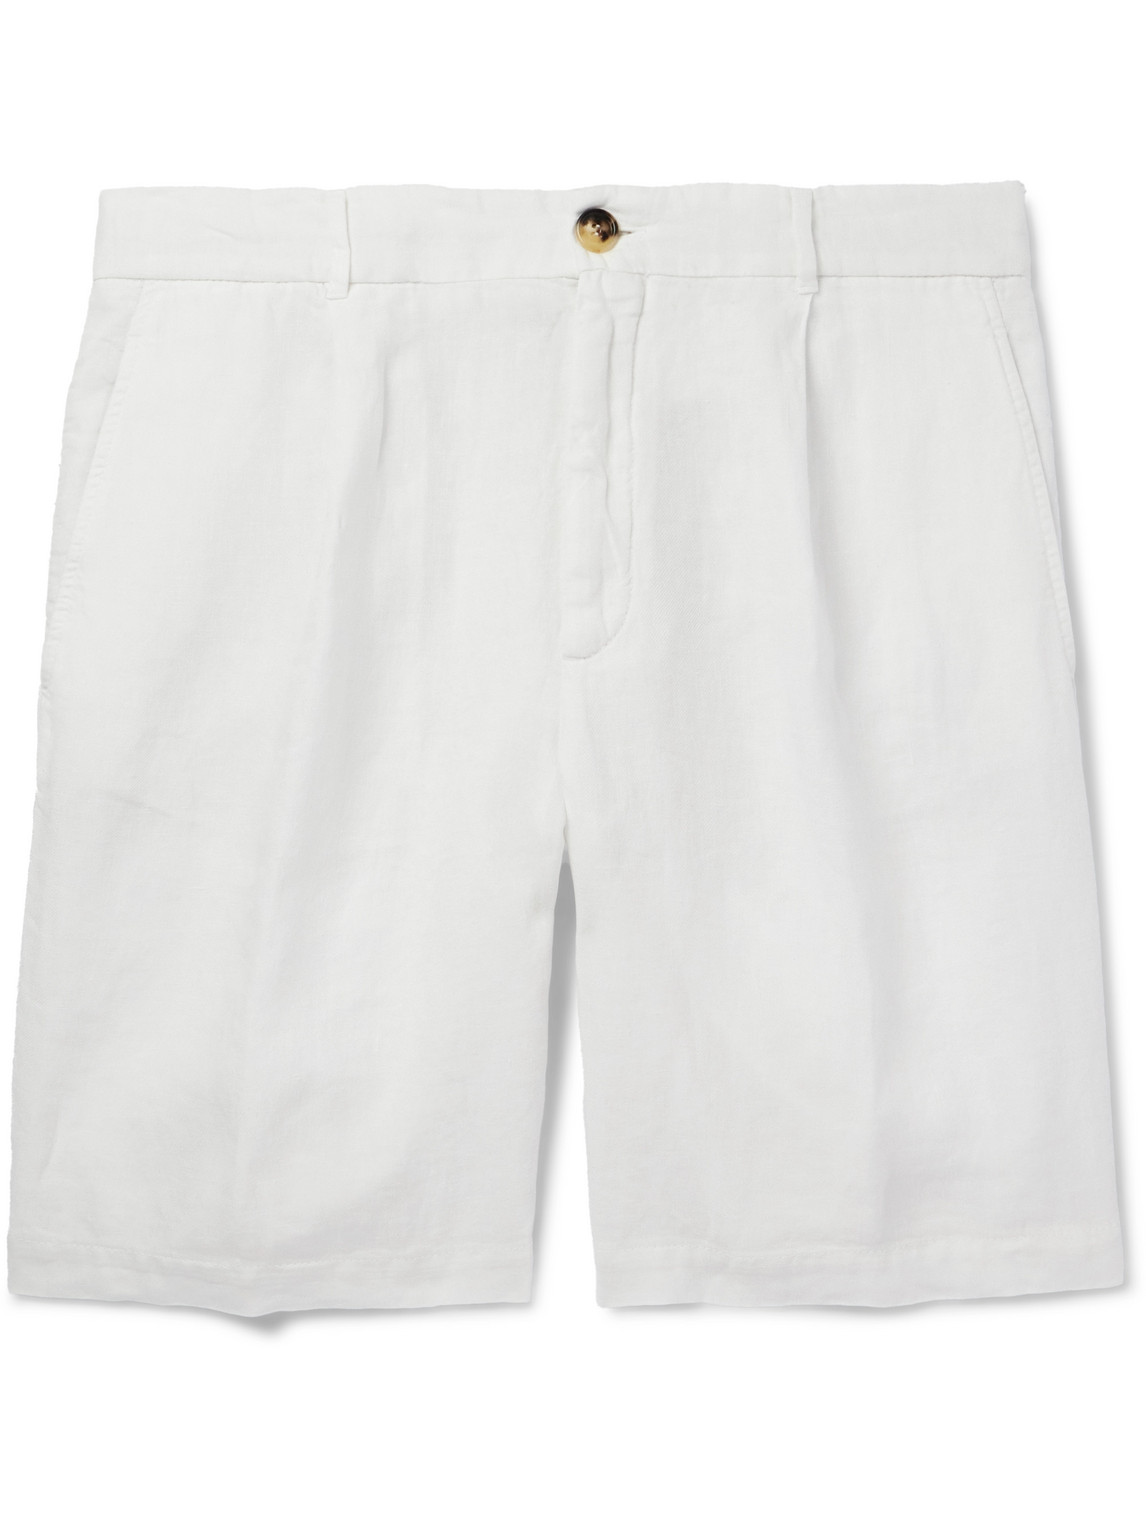 Straight-Leg Pleated Linen Bermuda Shorts